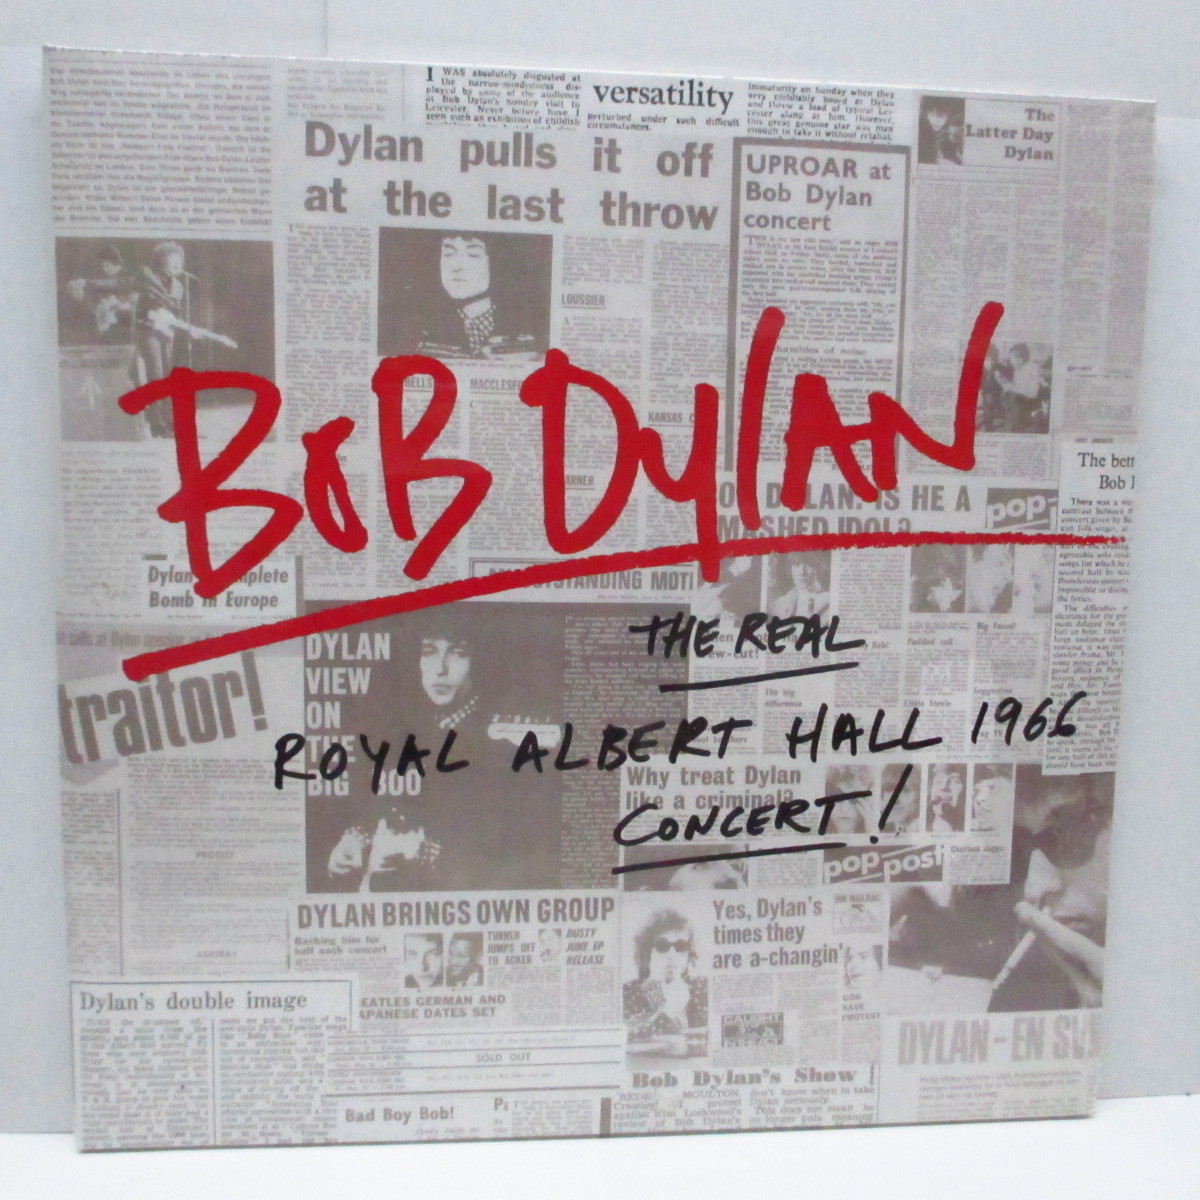 BOB DYLAN-The Real Royal Albert Hall 1966 Concert! (EU Orig._画像1